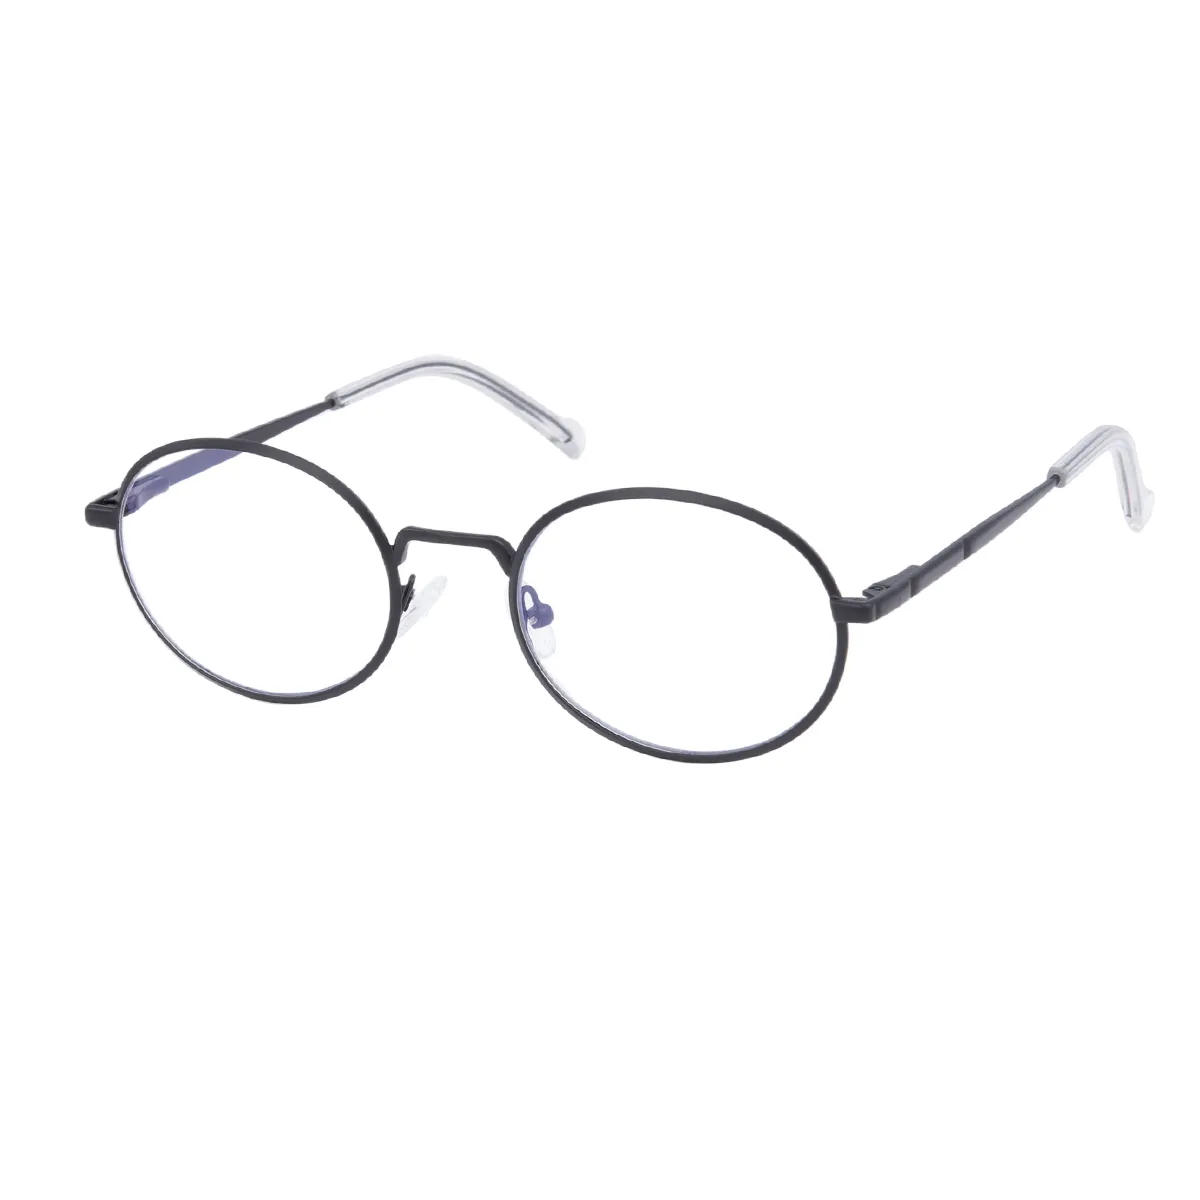 Hulda - Oval Black Glasses for Men & Women